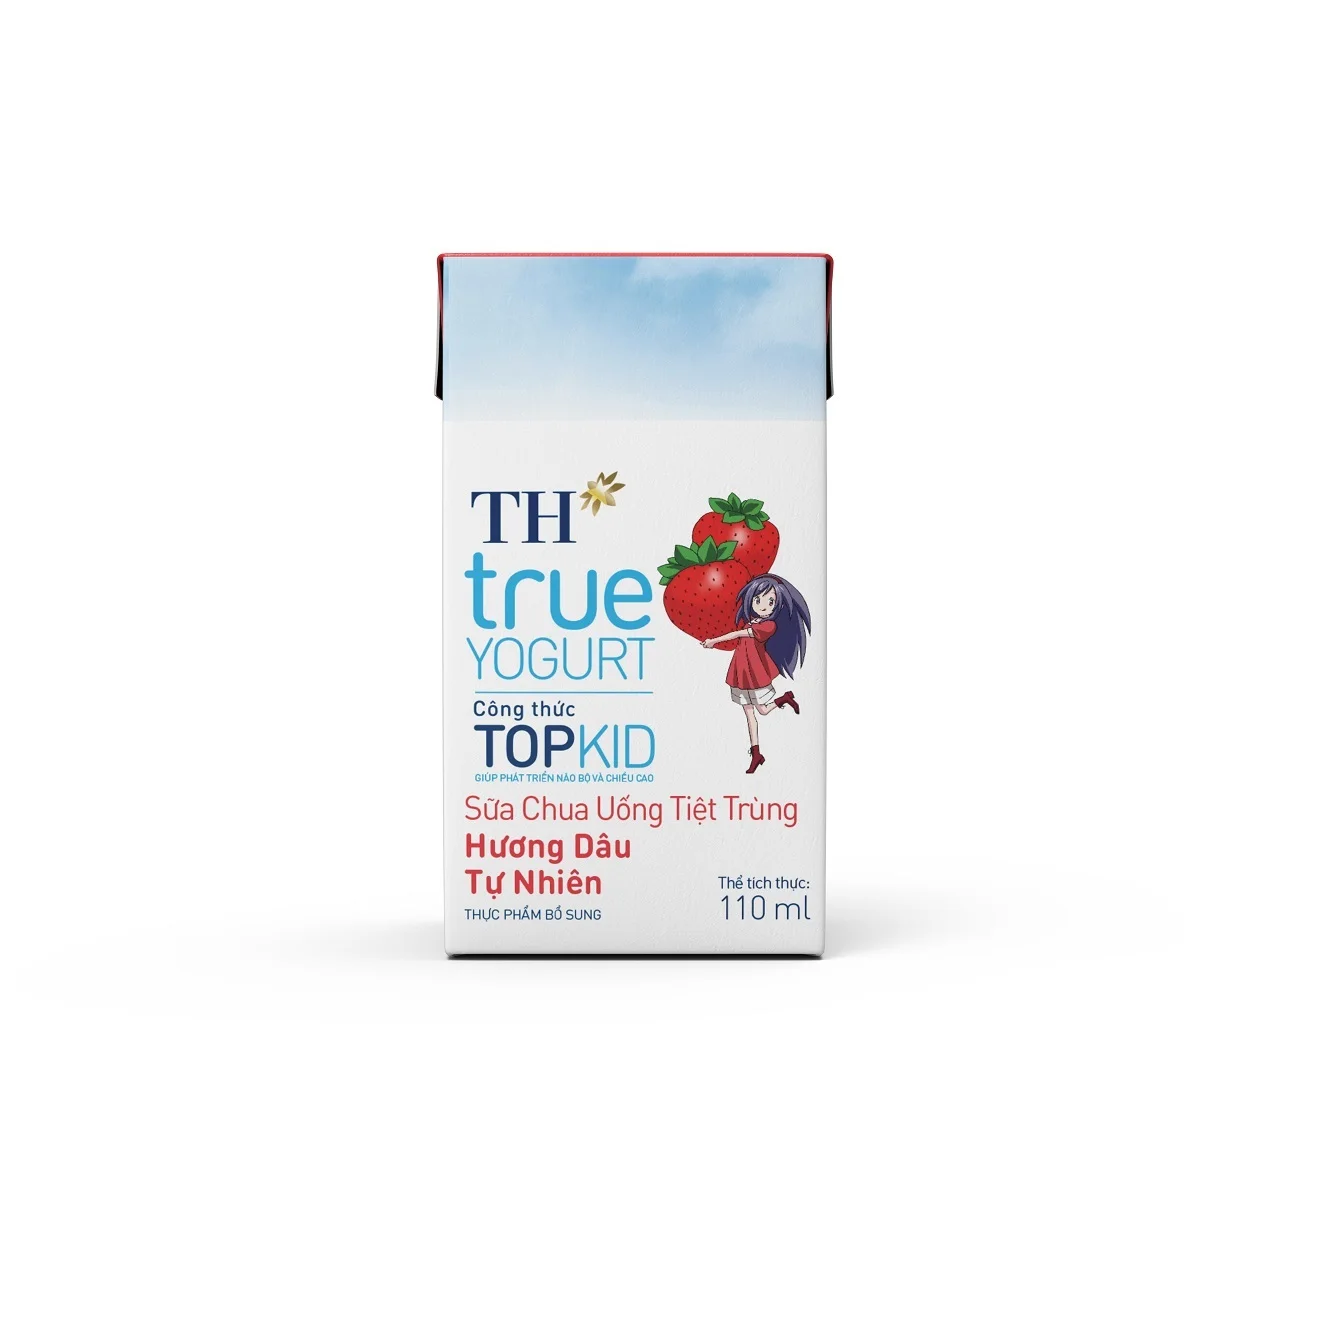 TH True Yogurt -TOPKID Formula - UHT Drinking Yogurt - Natural Strawberry Flavor 110mlx48 Fruity Yogurt